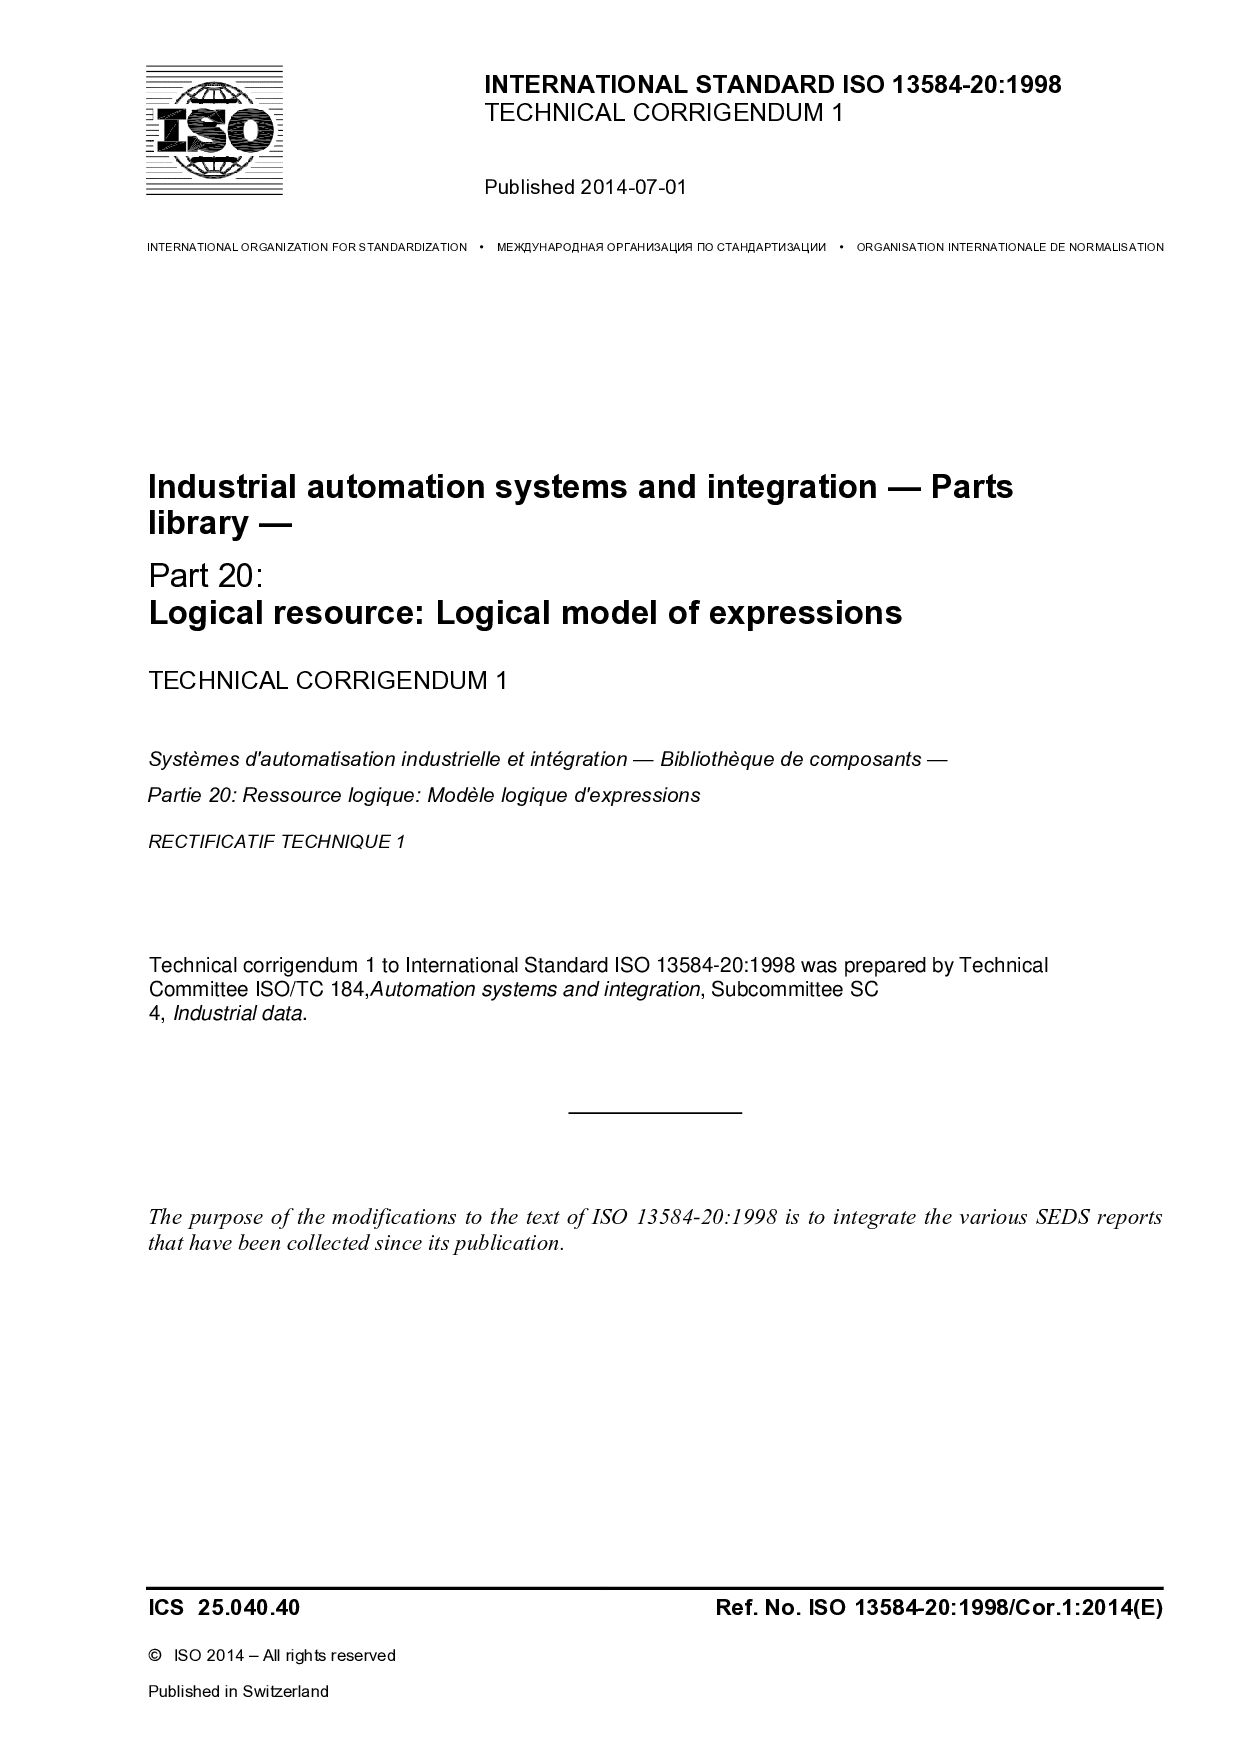 ISO 13584-20 Technical Corrigendum 1-2014